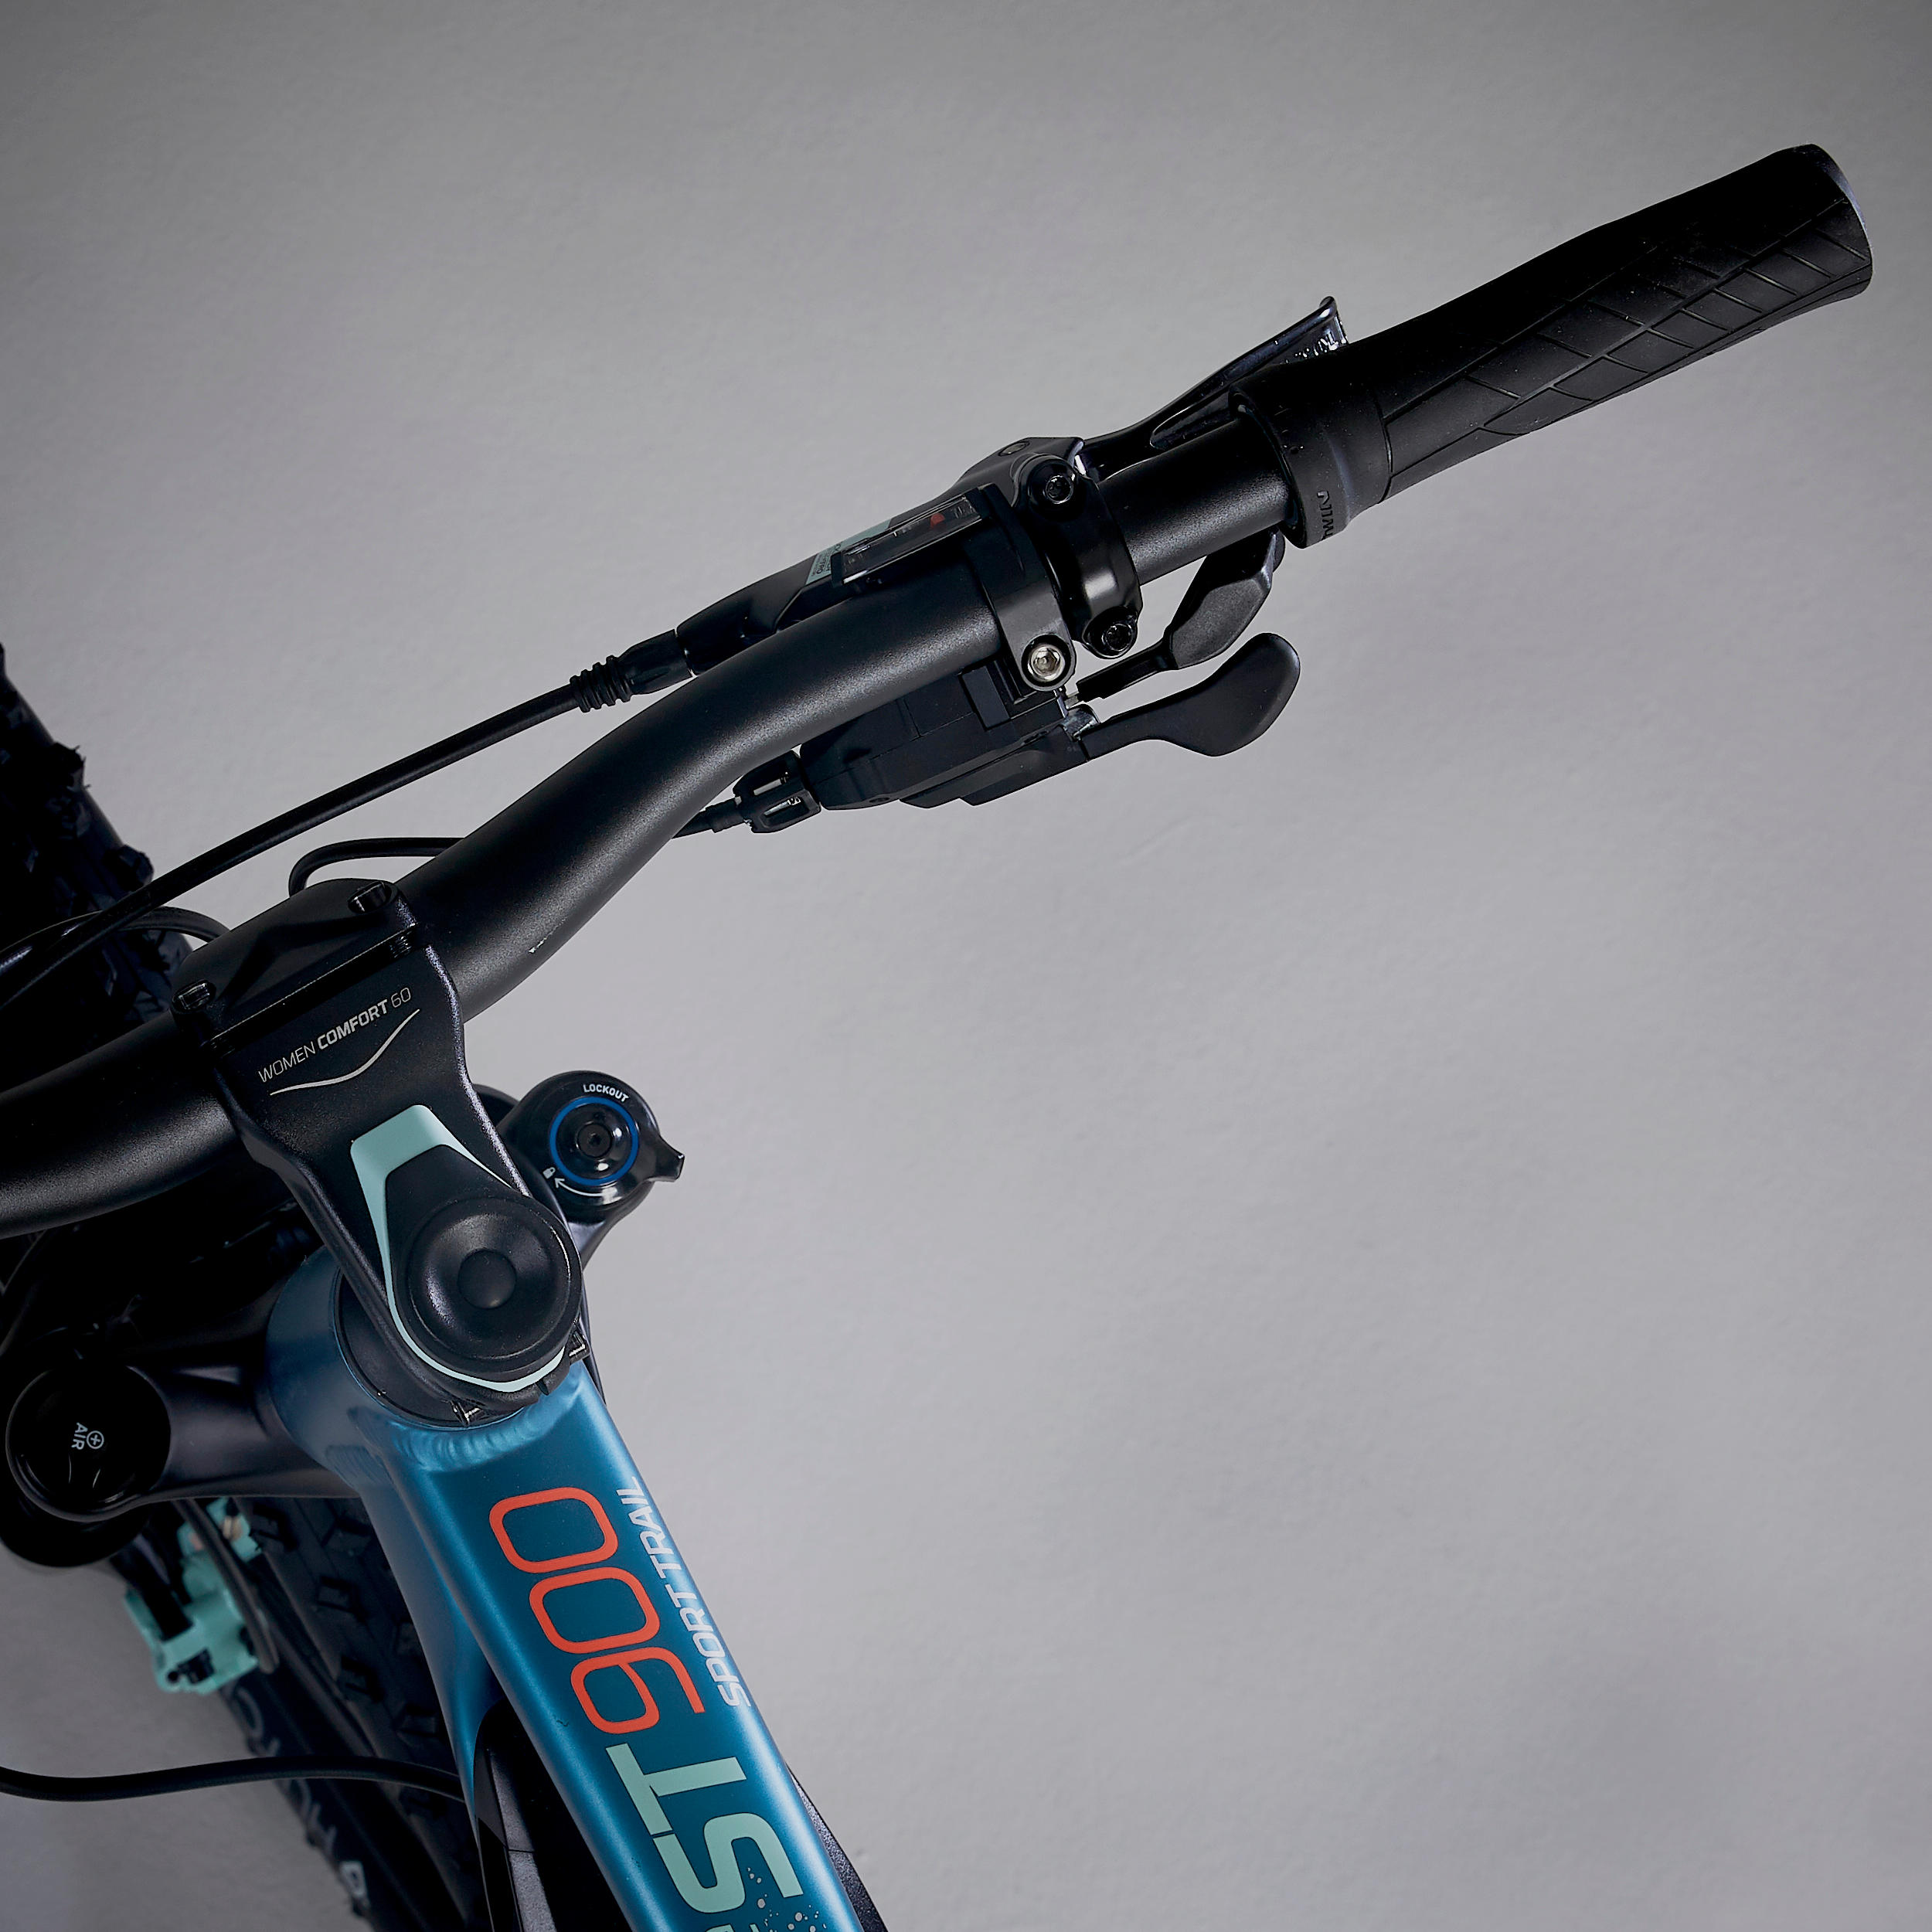 Women's 27.5" + Electric Semi-Rigid E-ST 900 MTB Bike - Turquoise 6/14